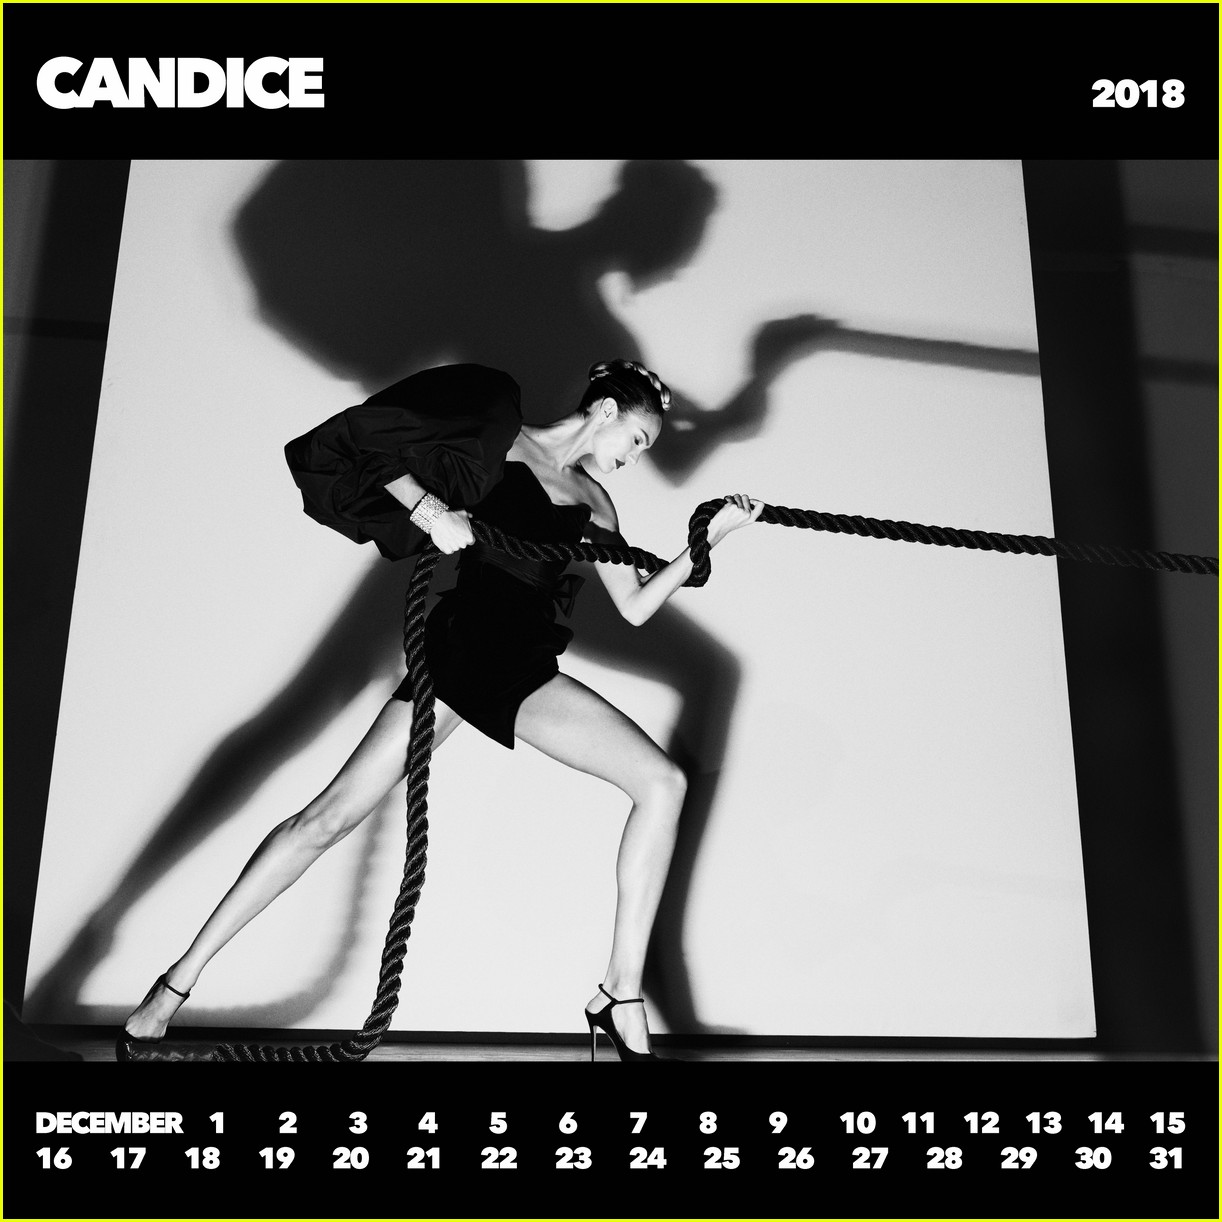 CR Girls 2018 with Technogym Candice Swanepoel